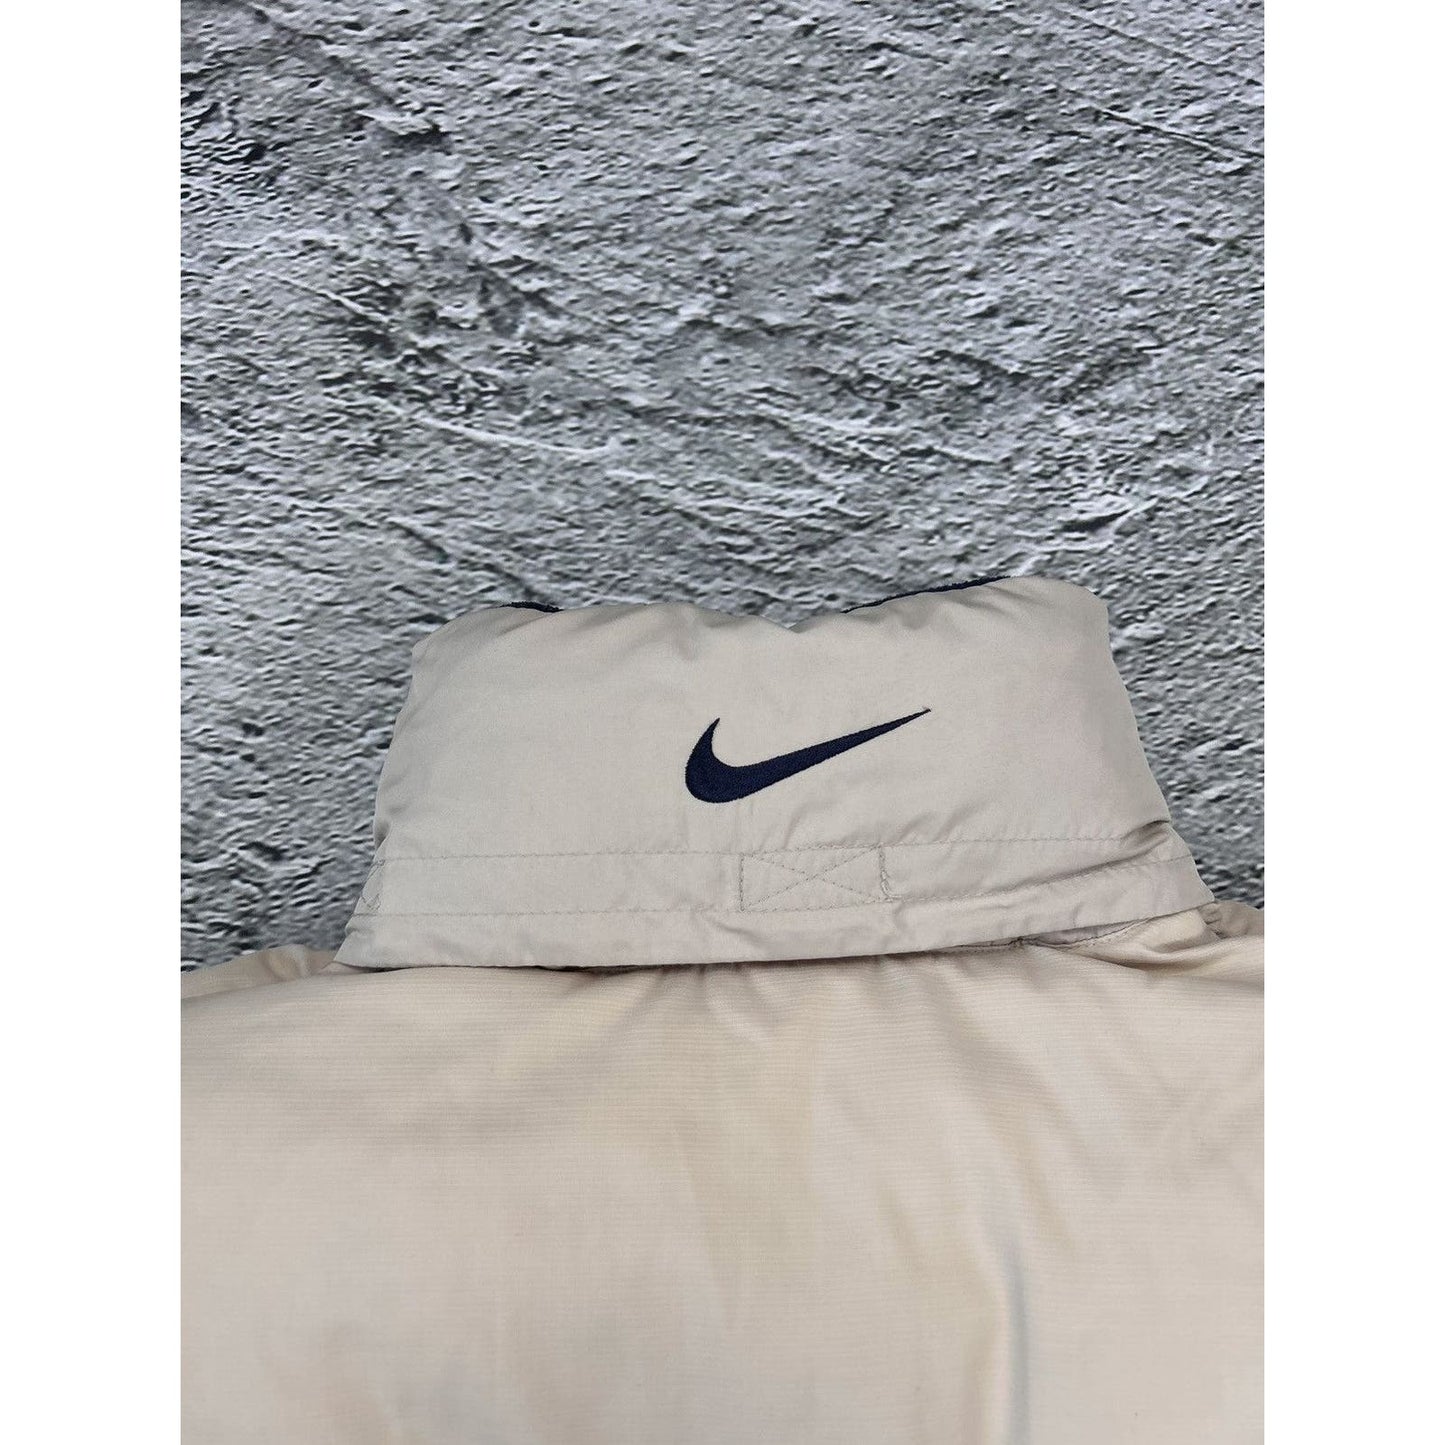 Nike puffer jacket vintage beige small logo 2000s